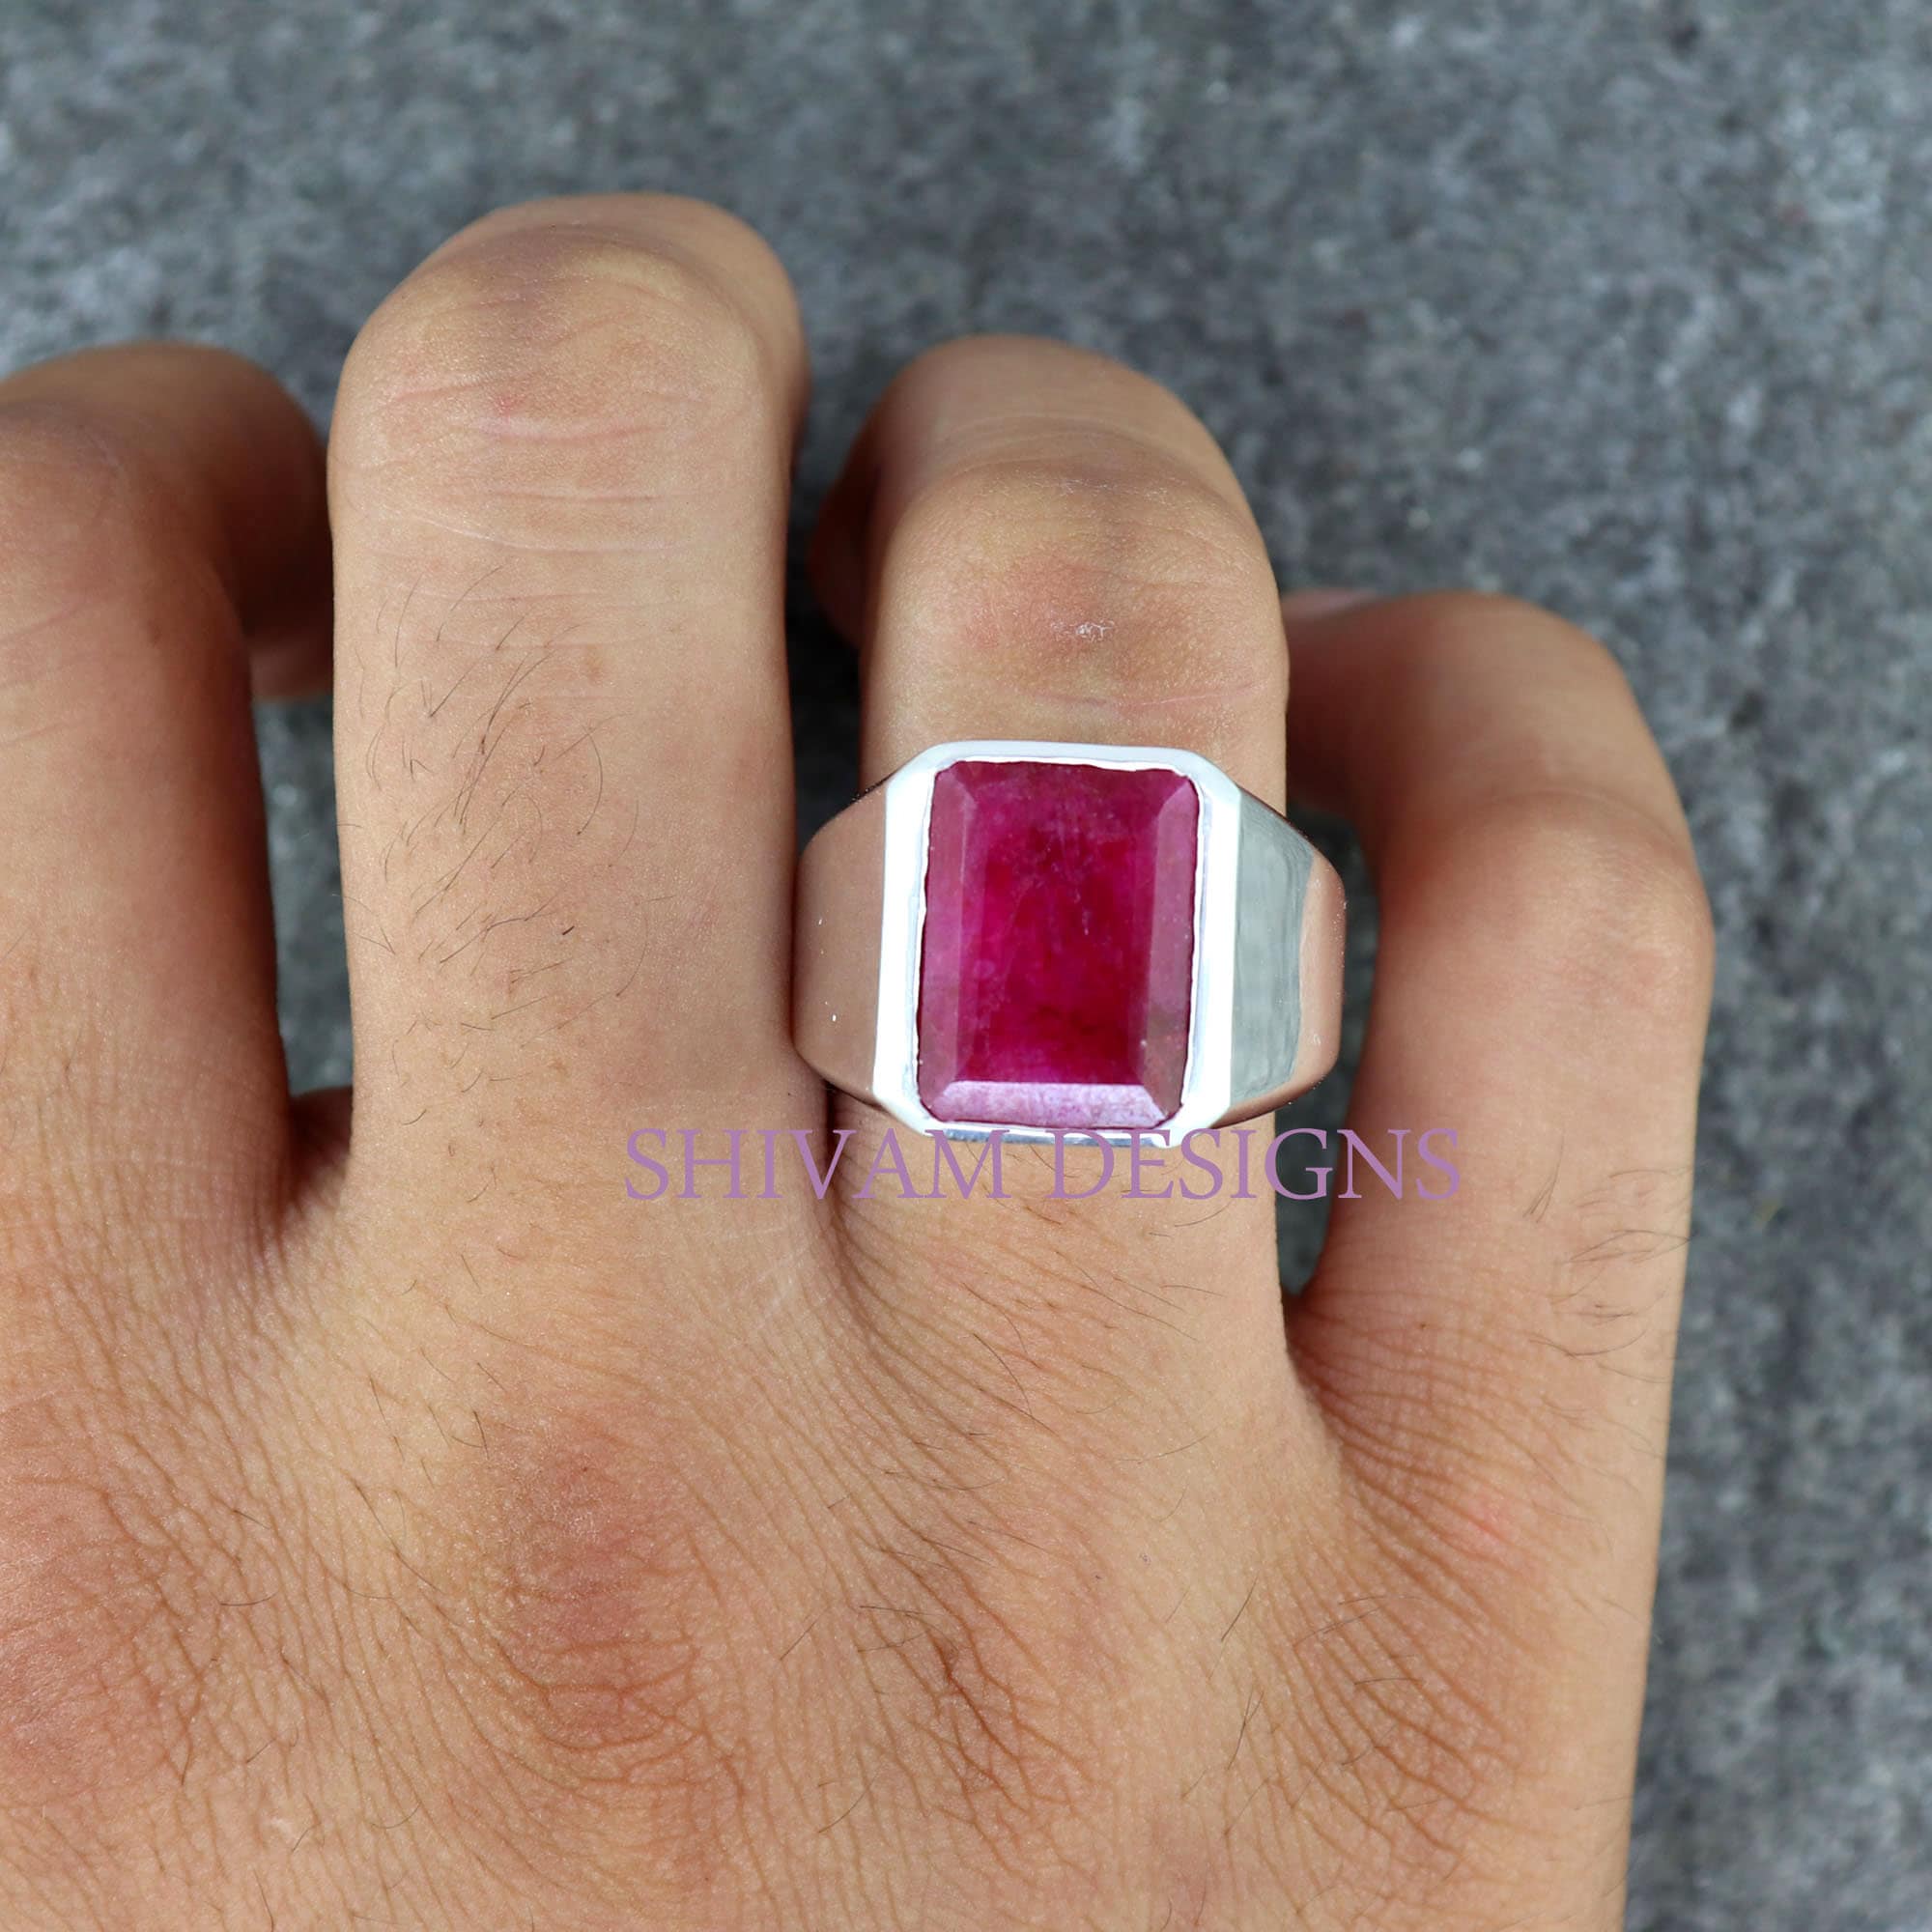 Mens Ruby Ring : The Supreme Red Gem. | Mens ruby ring, Ruby ring, Rings  for men